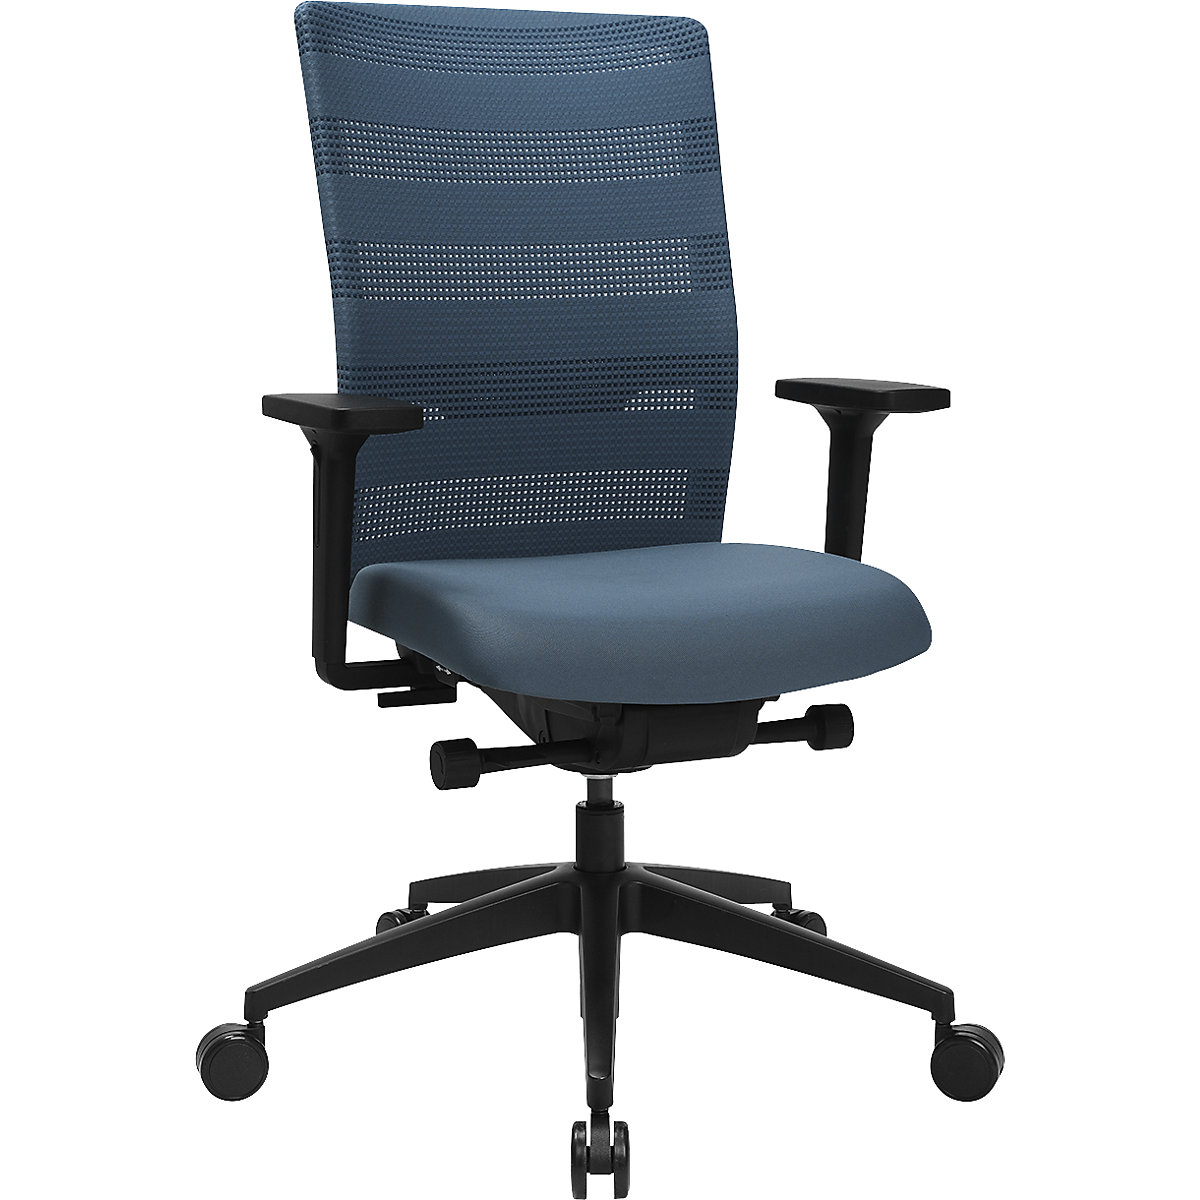 SITNESS AirWork office swivel chair - Topstar